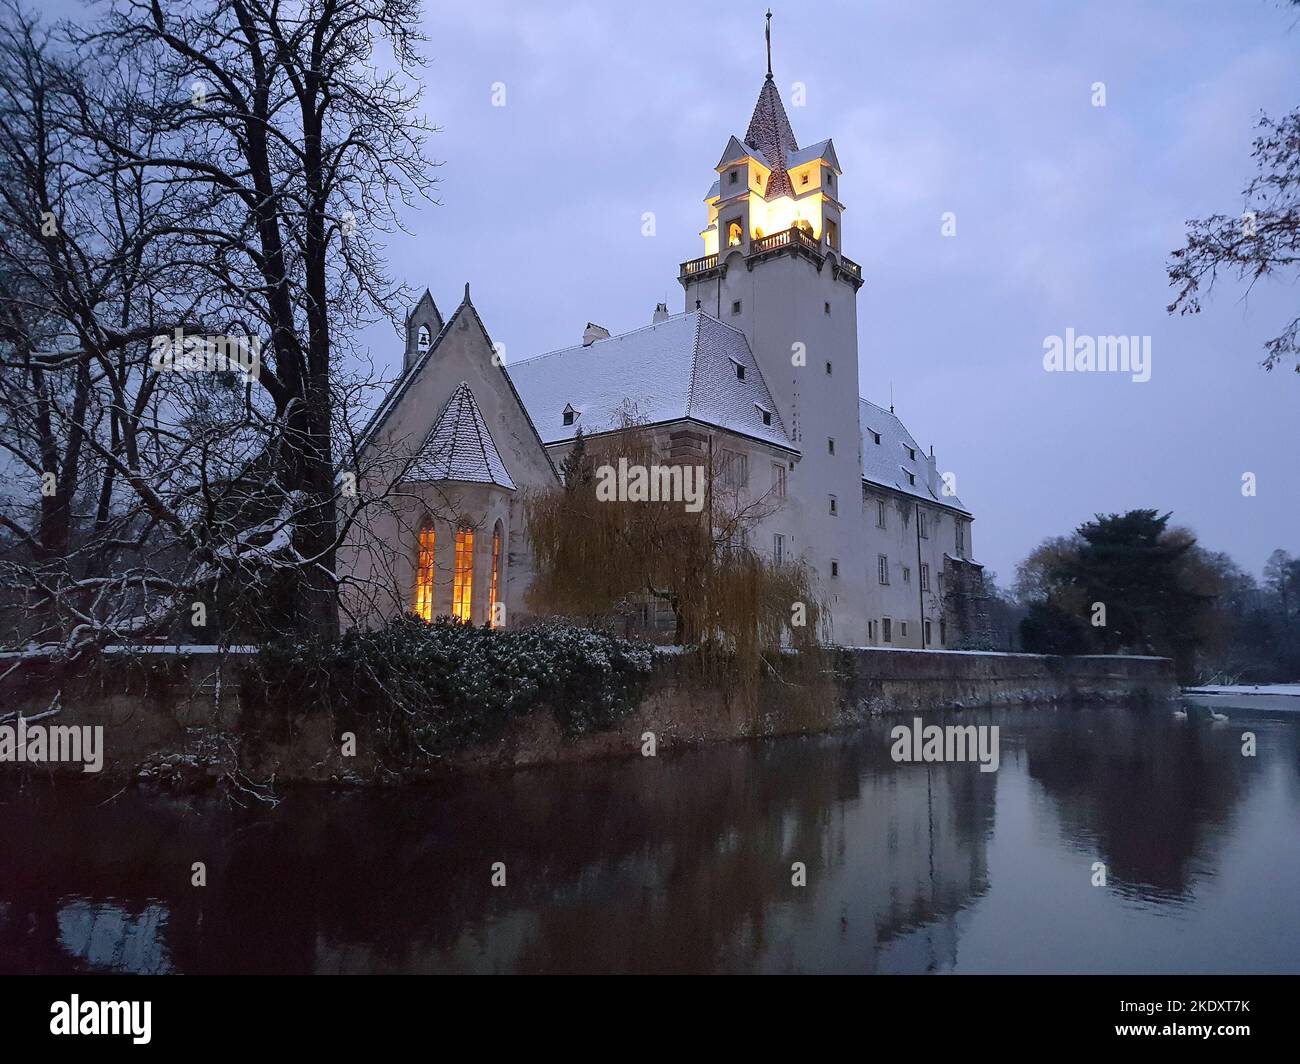 Austria, illuminated castle Ebreichsdorf with reflection in pond Stock Photo